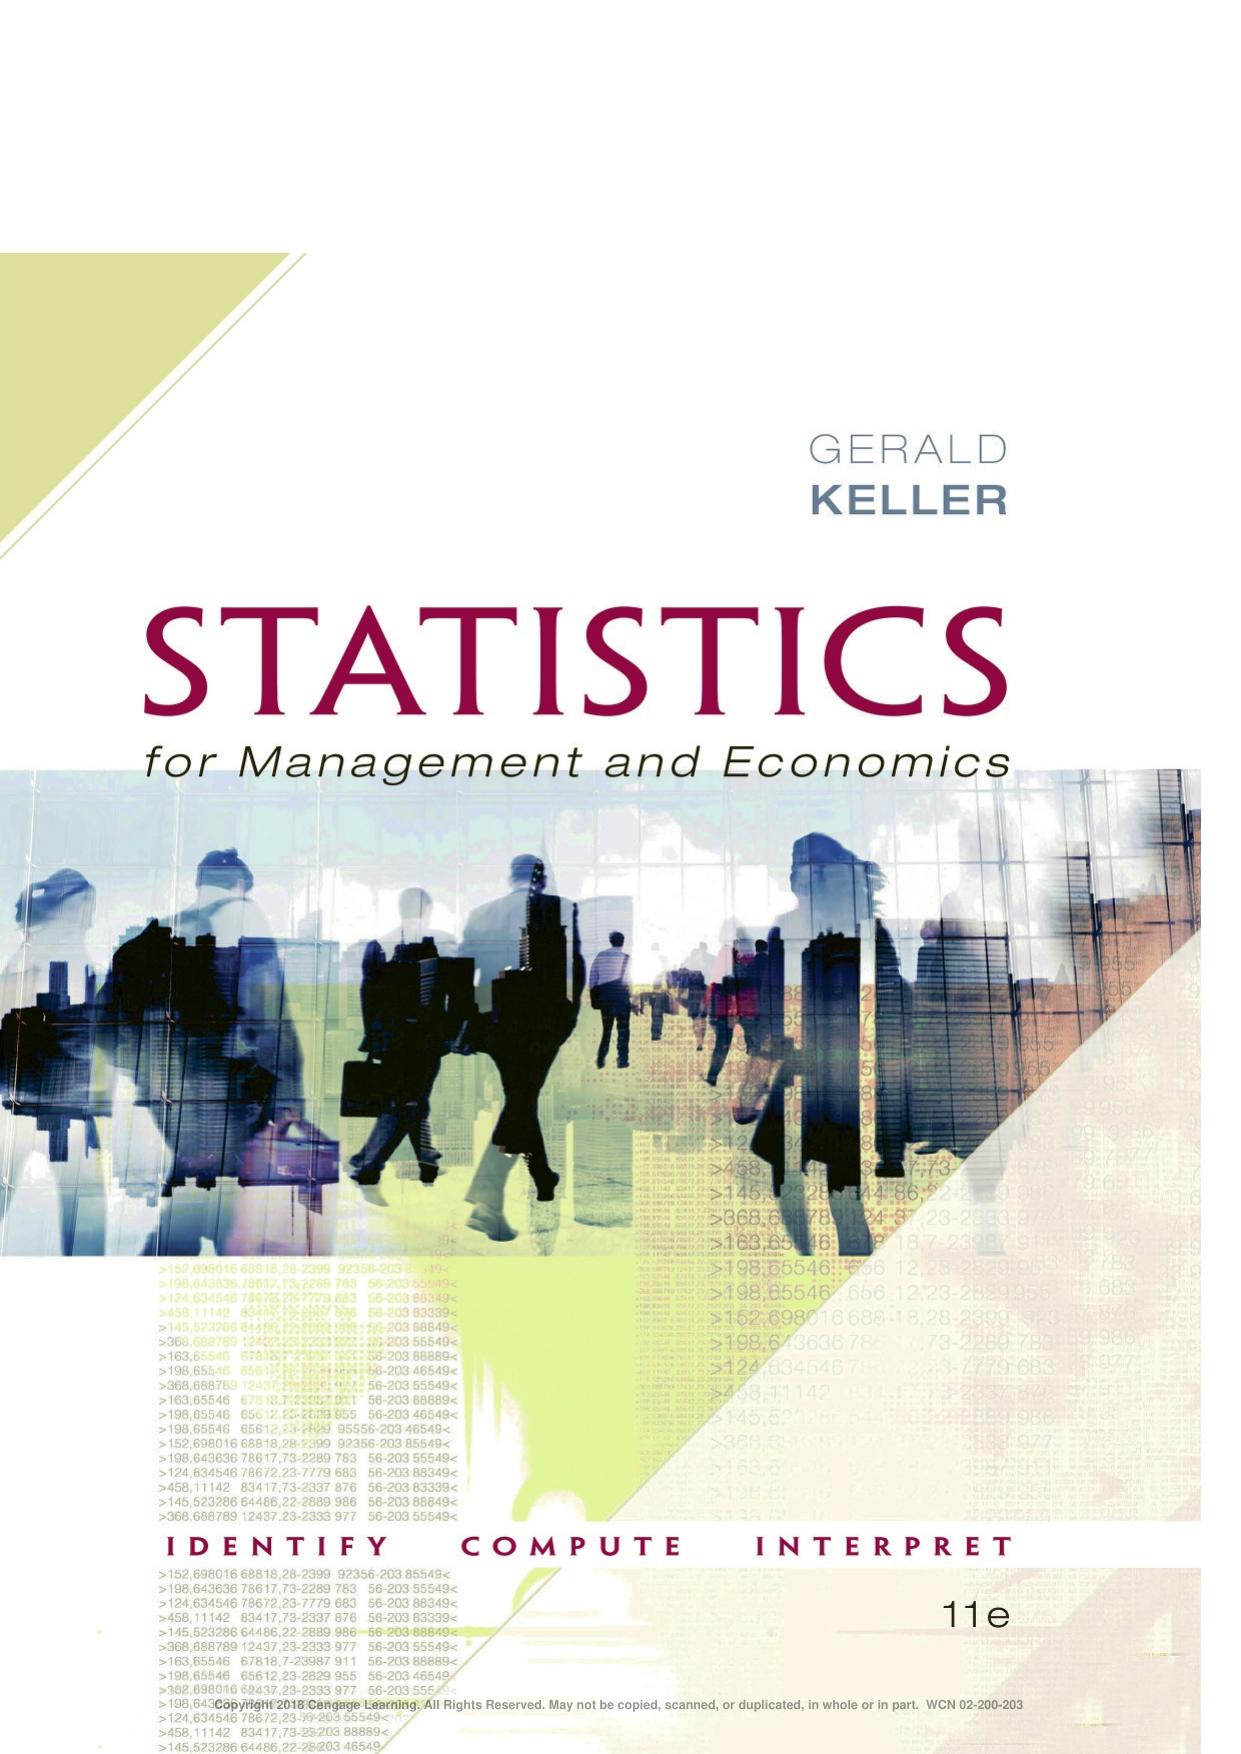 Statistics for management and economics 2018